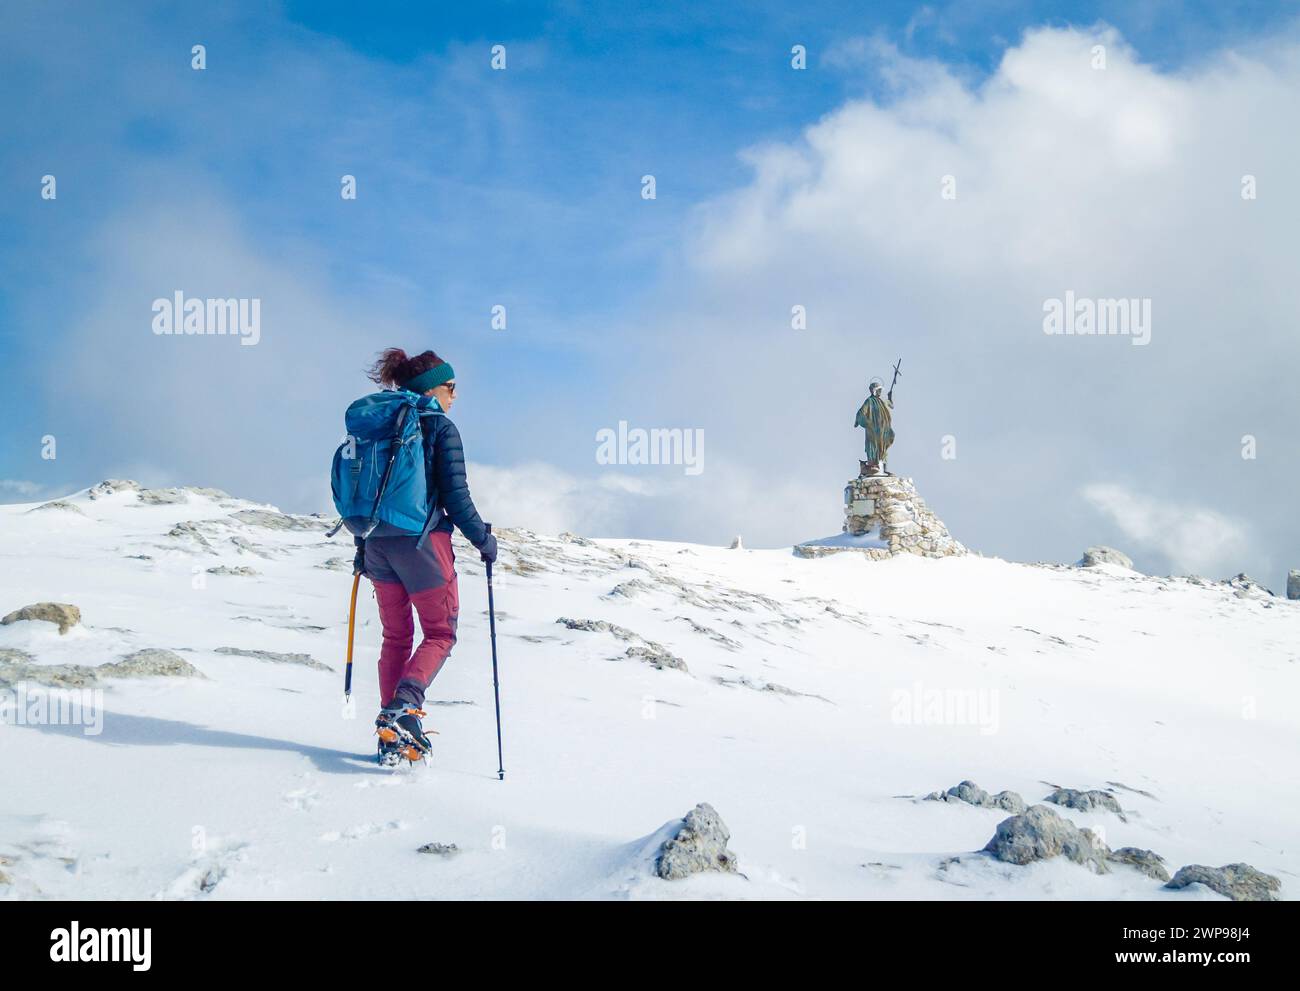 Mount Cantari (Lazio, Italy) - In the Monti Simbruini mountain range with Monte Viglio, province of Frosinone, here in winter with snow and alpinist. Stock Photo